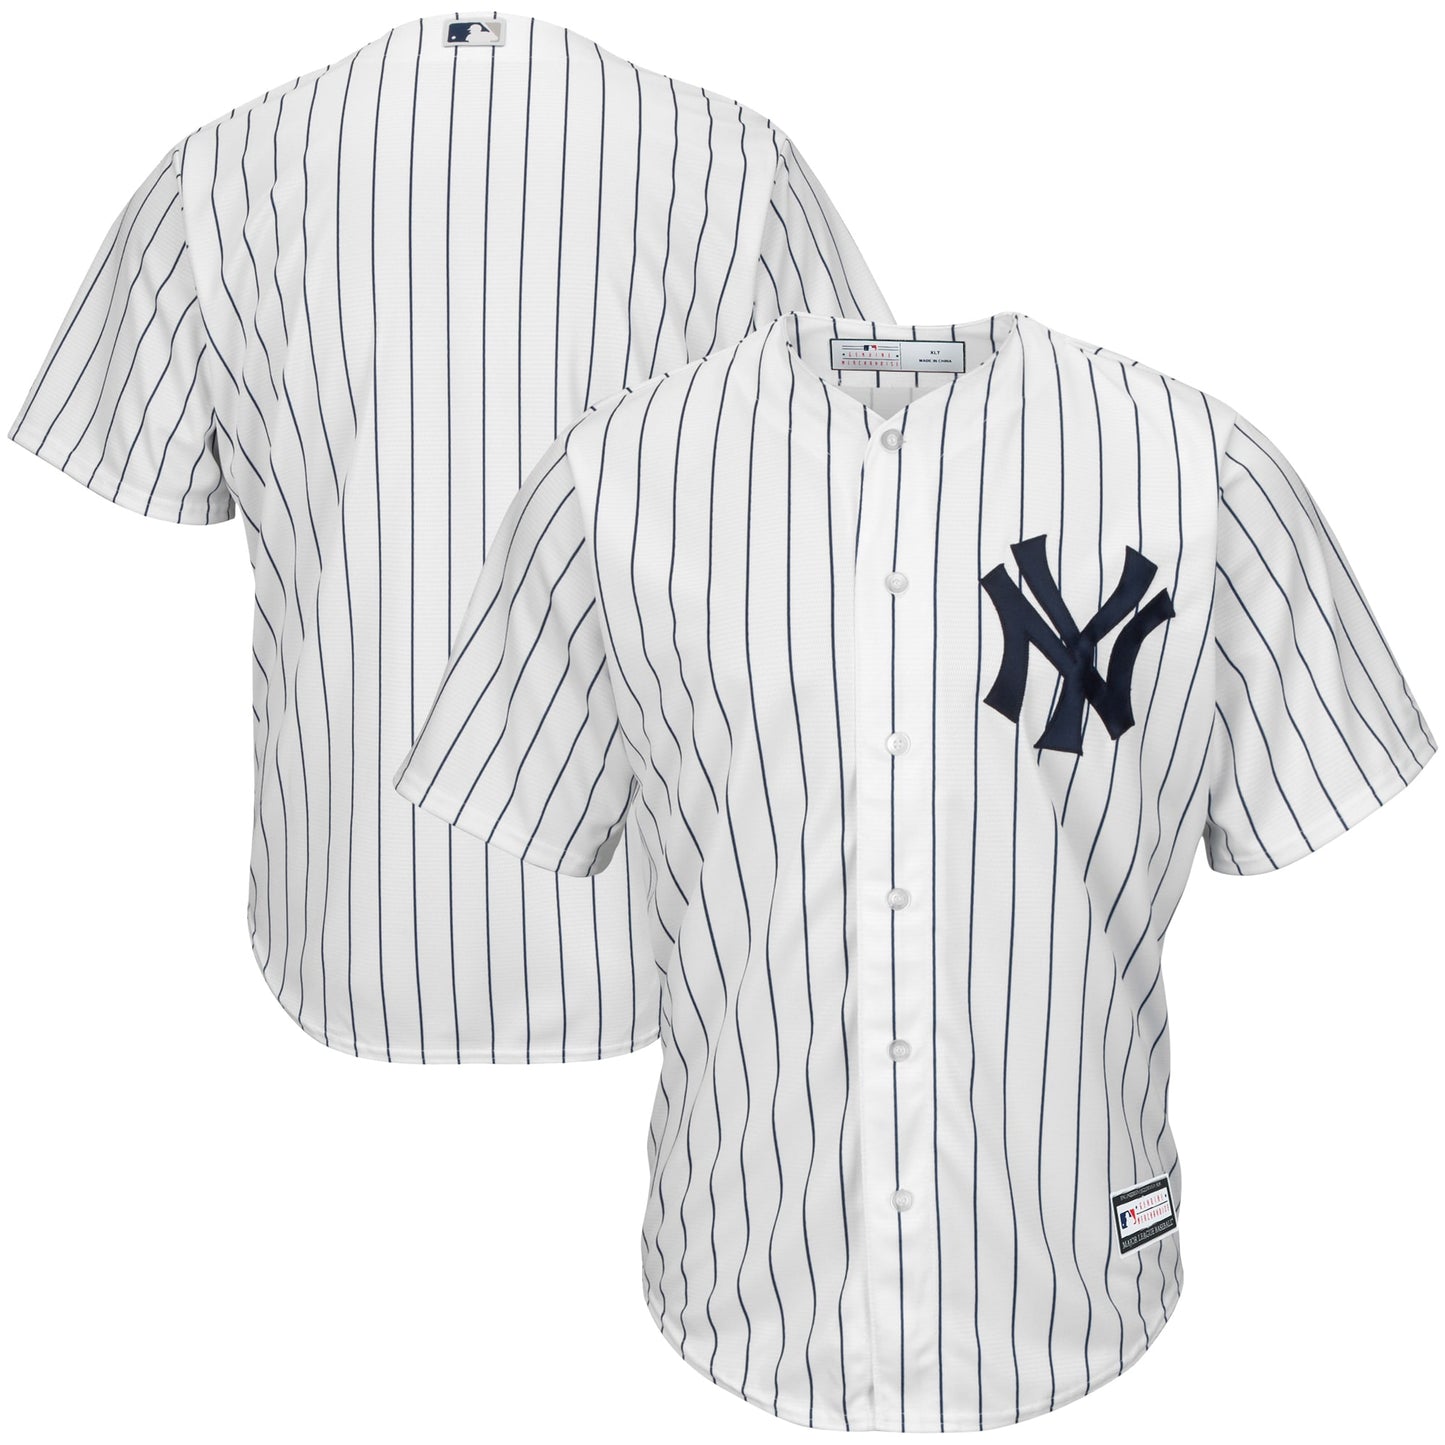 New York Yankees Big & Tall Replica Team Jersey - White